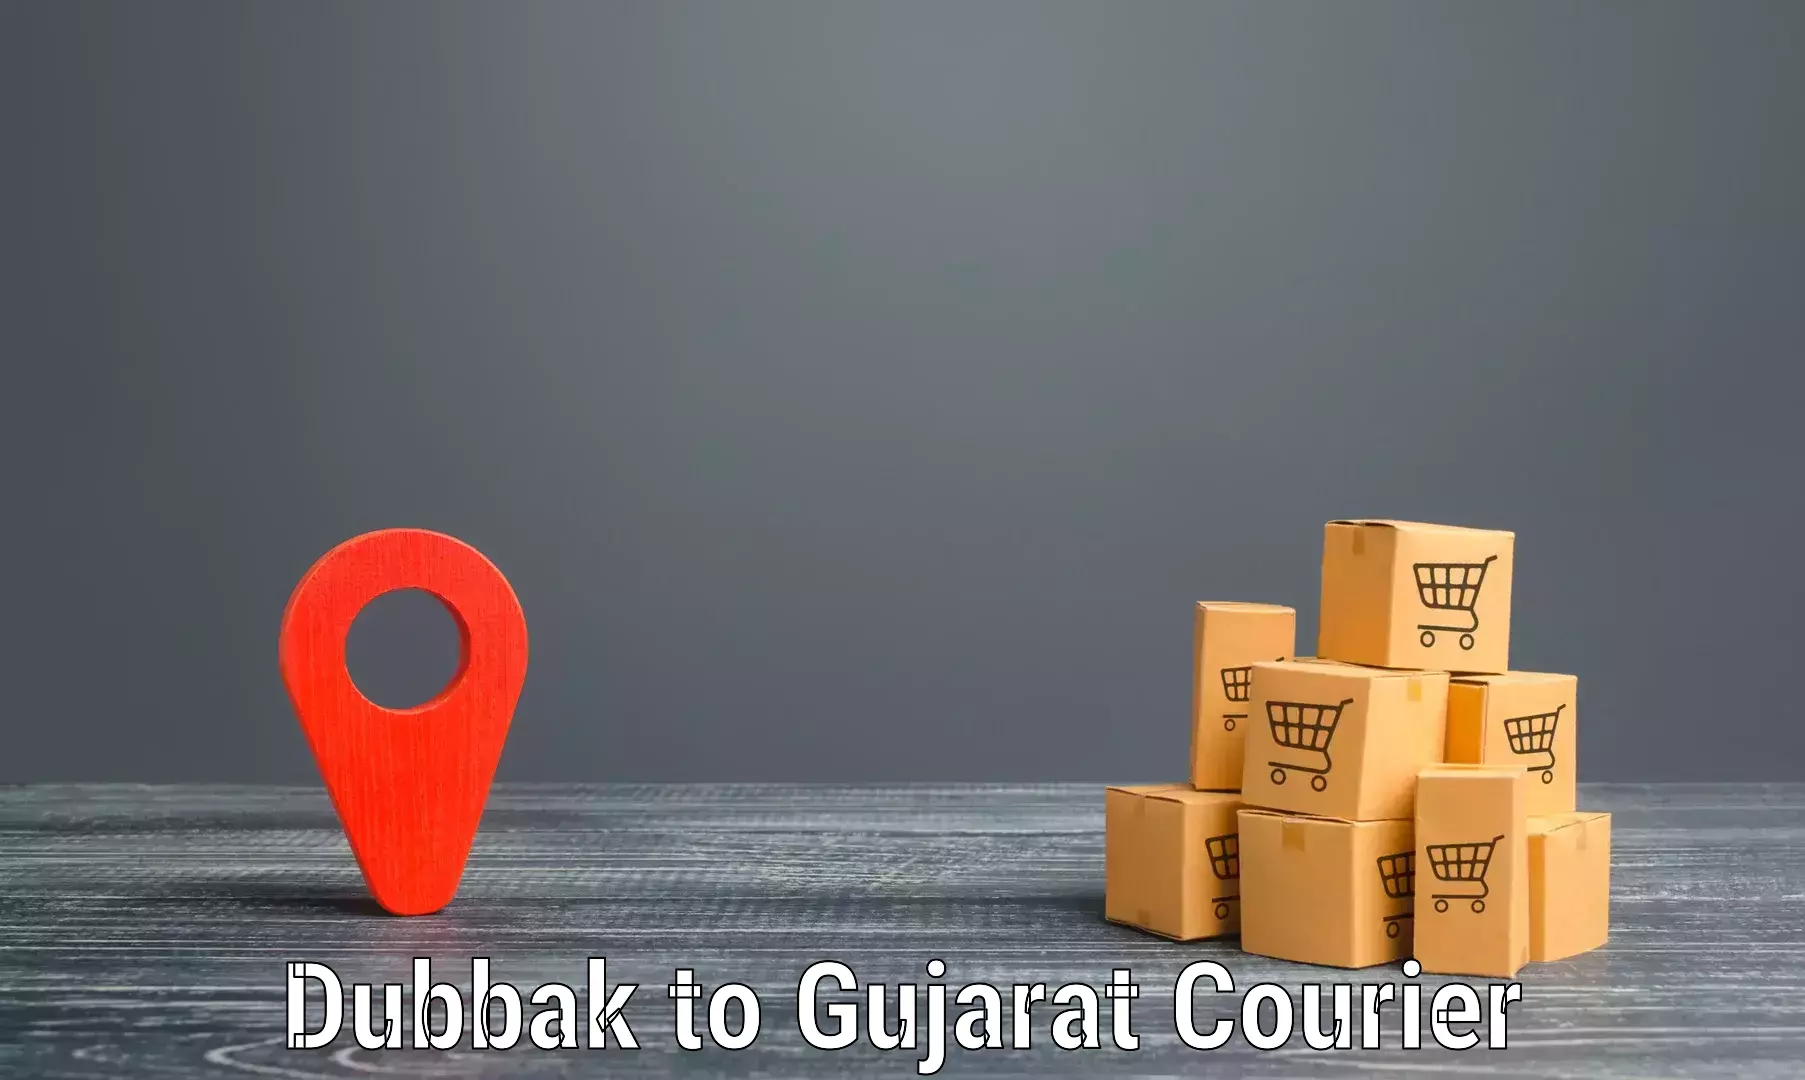 Professional courier handling Dubbak to Vijapur